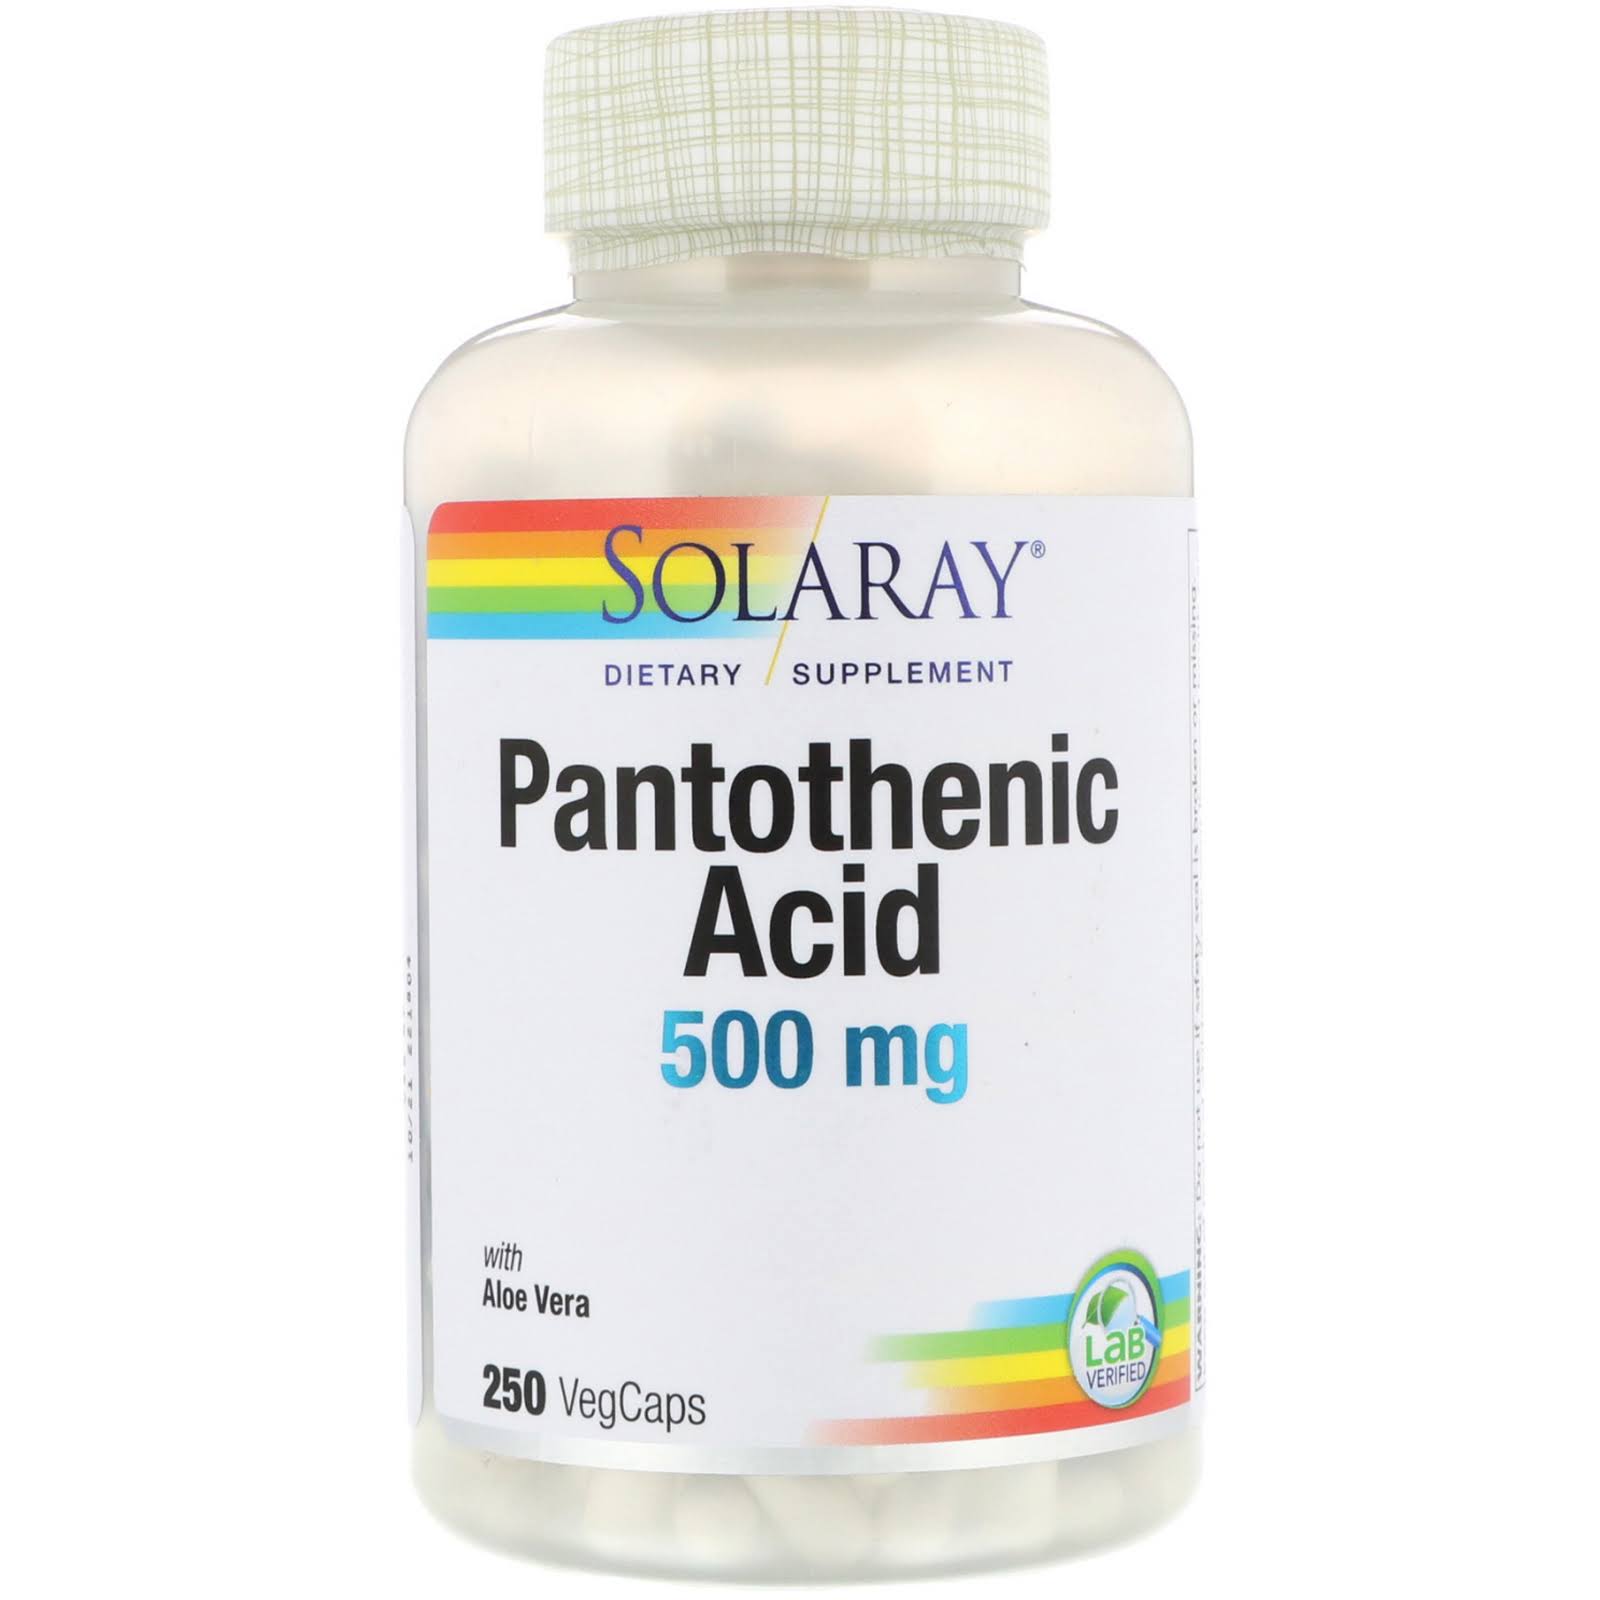 Solaray Pantothenic Acid Supplement - 500mg, 250ct